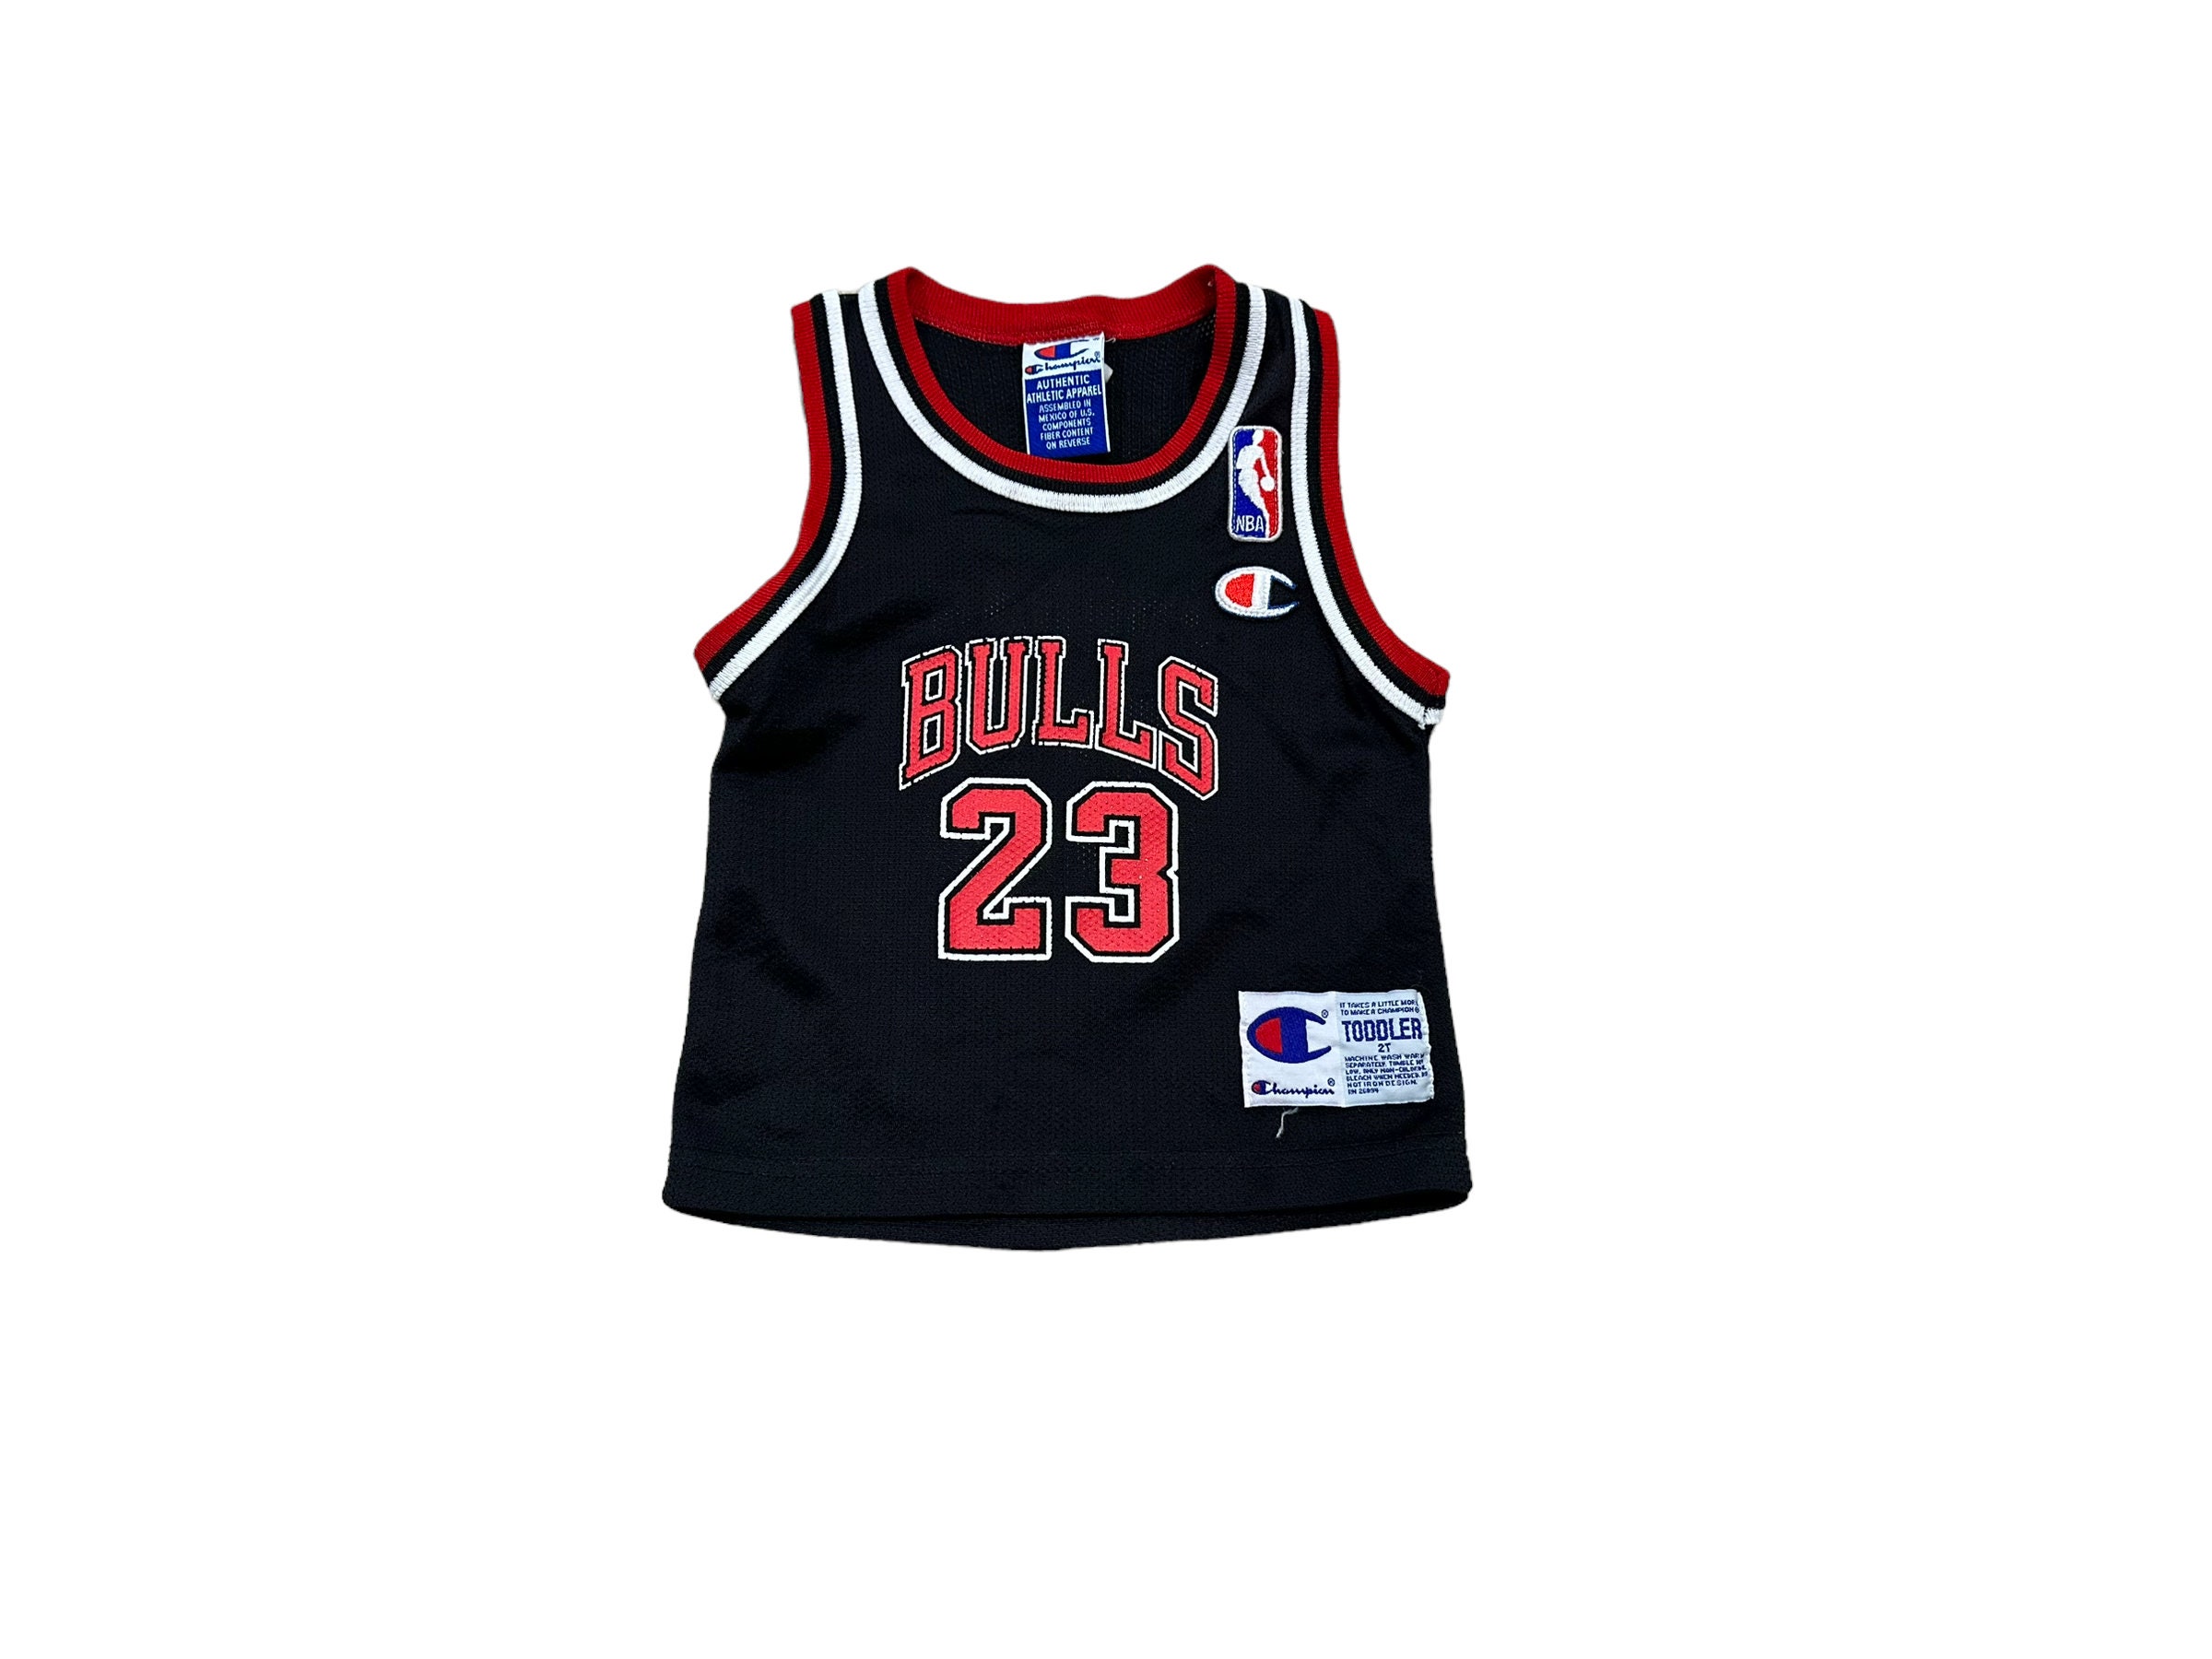 Youth Kids Michael Jordan Basketball Uniform - Jersey & Shorts - Bulls -  Boys Size 4T